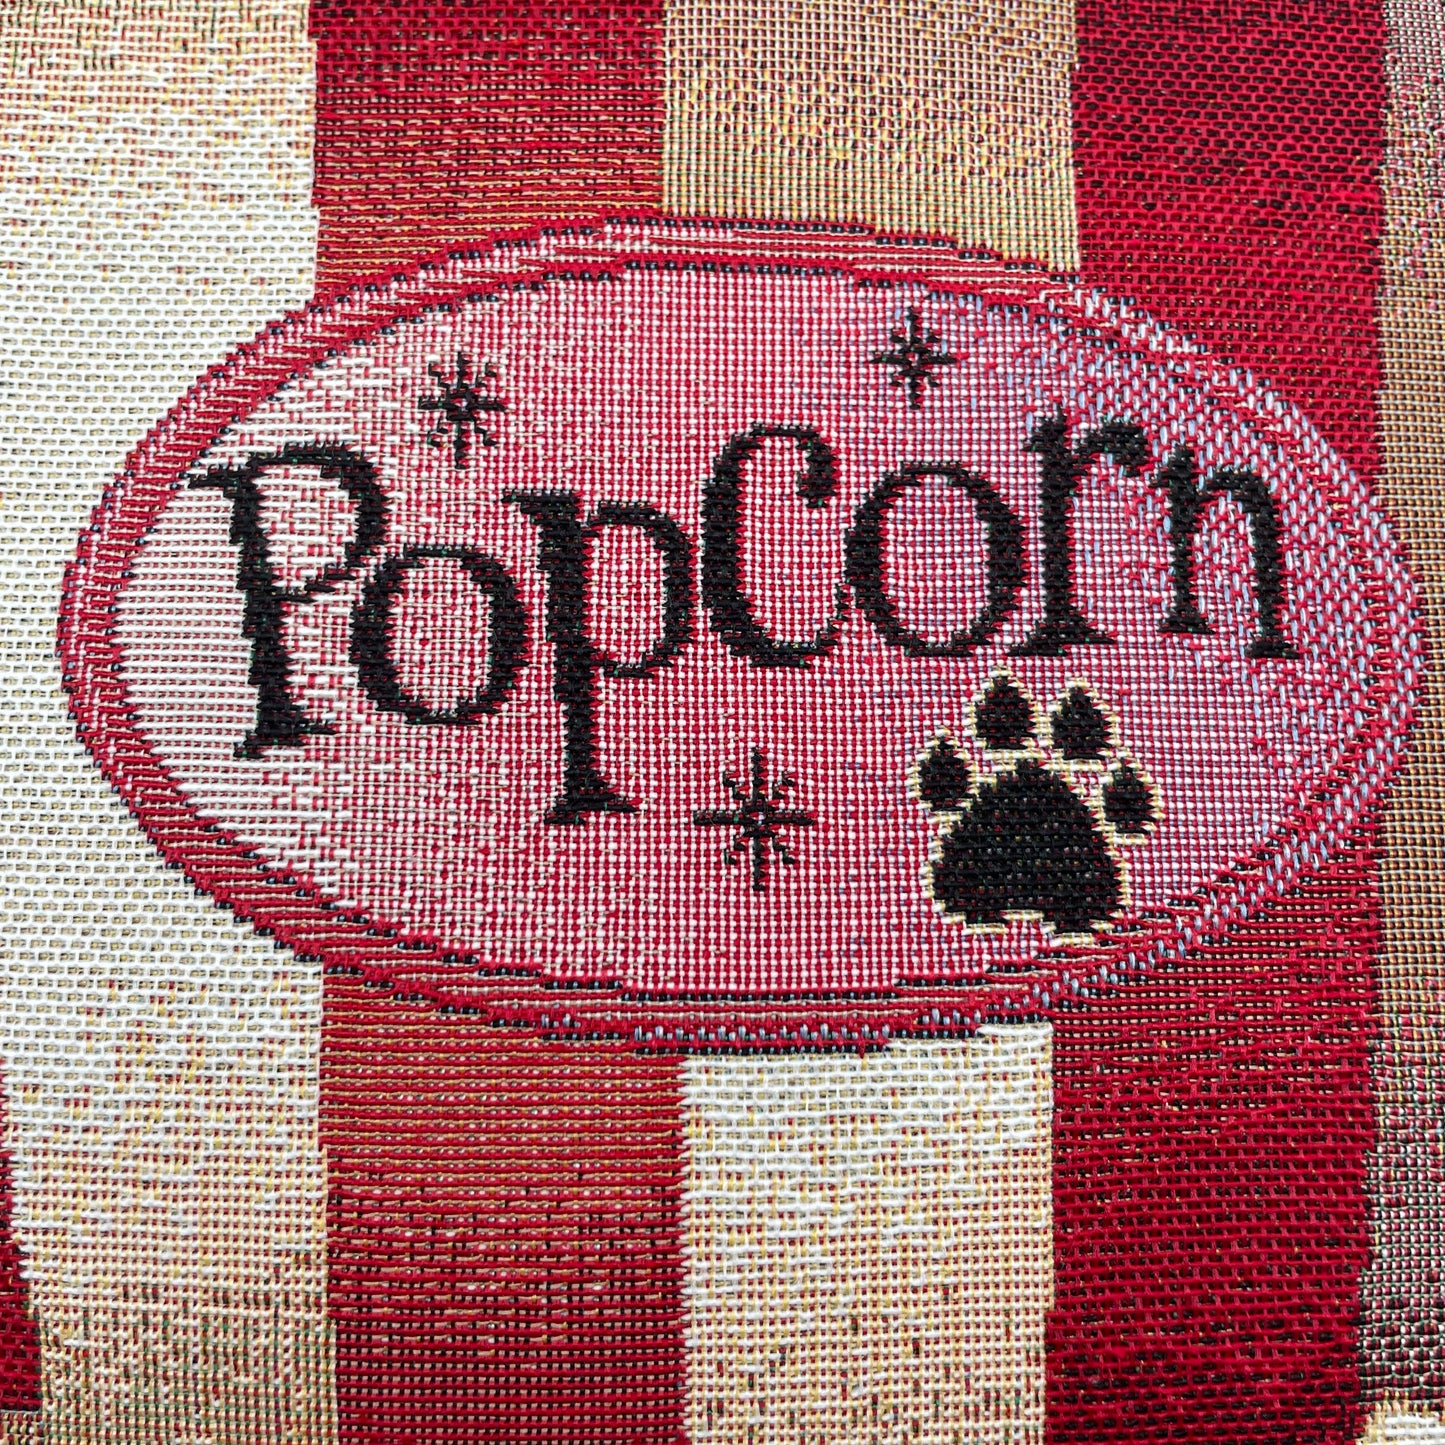 Kissenhülle Gobelin Popcorn 45x45cm | Kissenbezug Hund Popcorn   von Wimpelberg